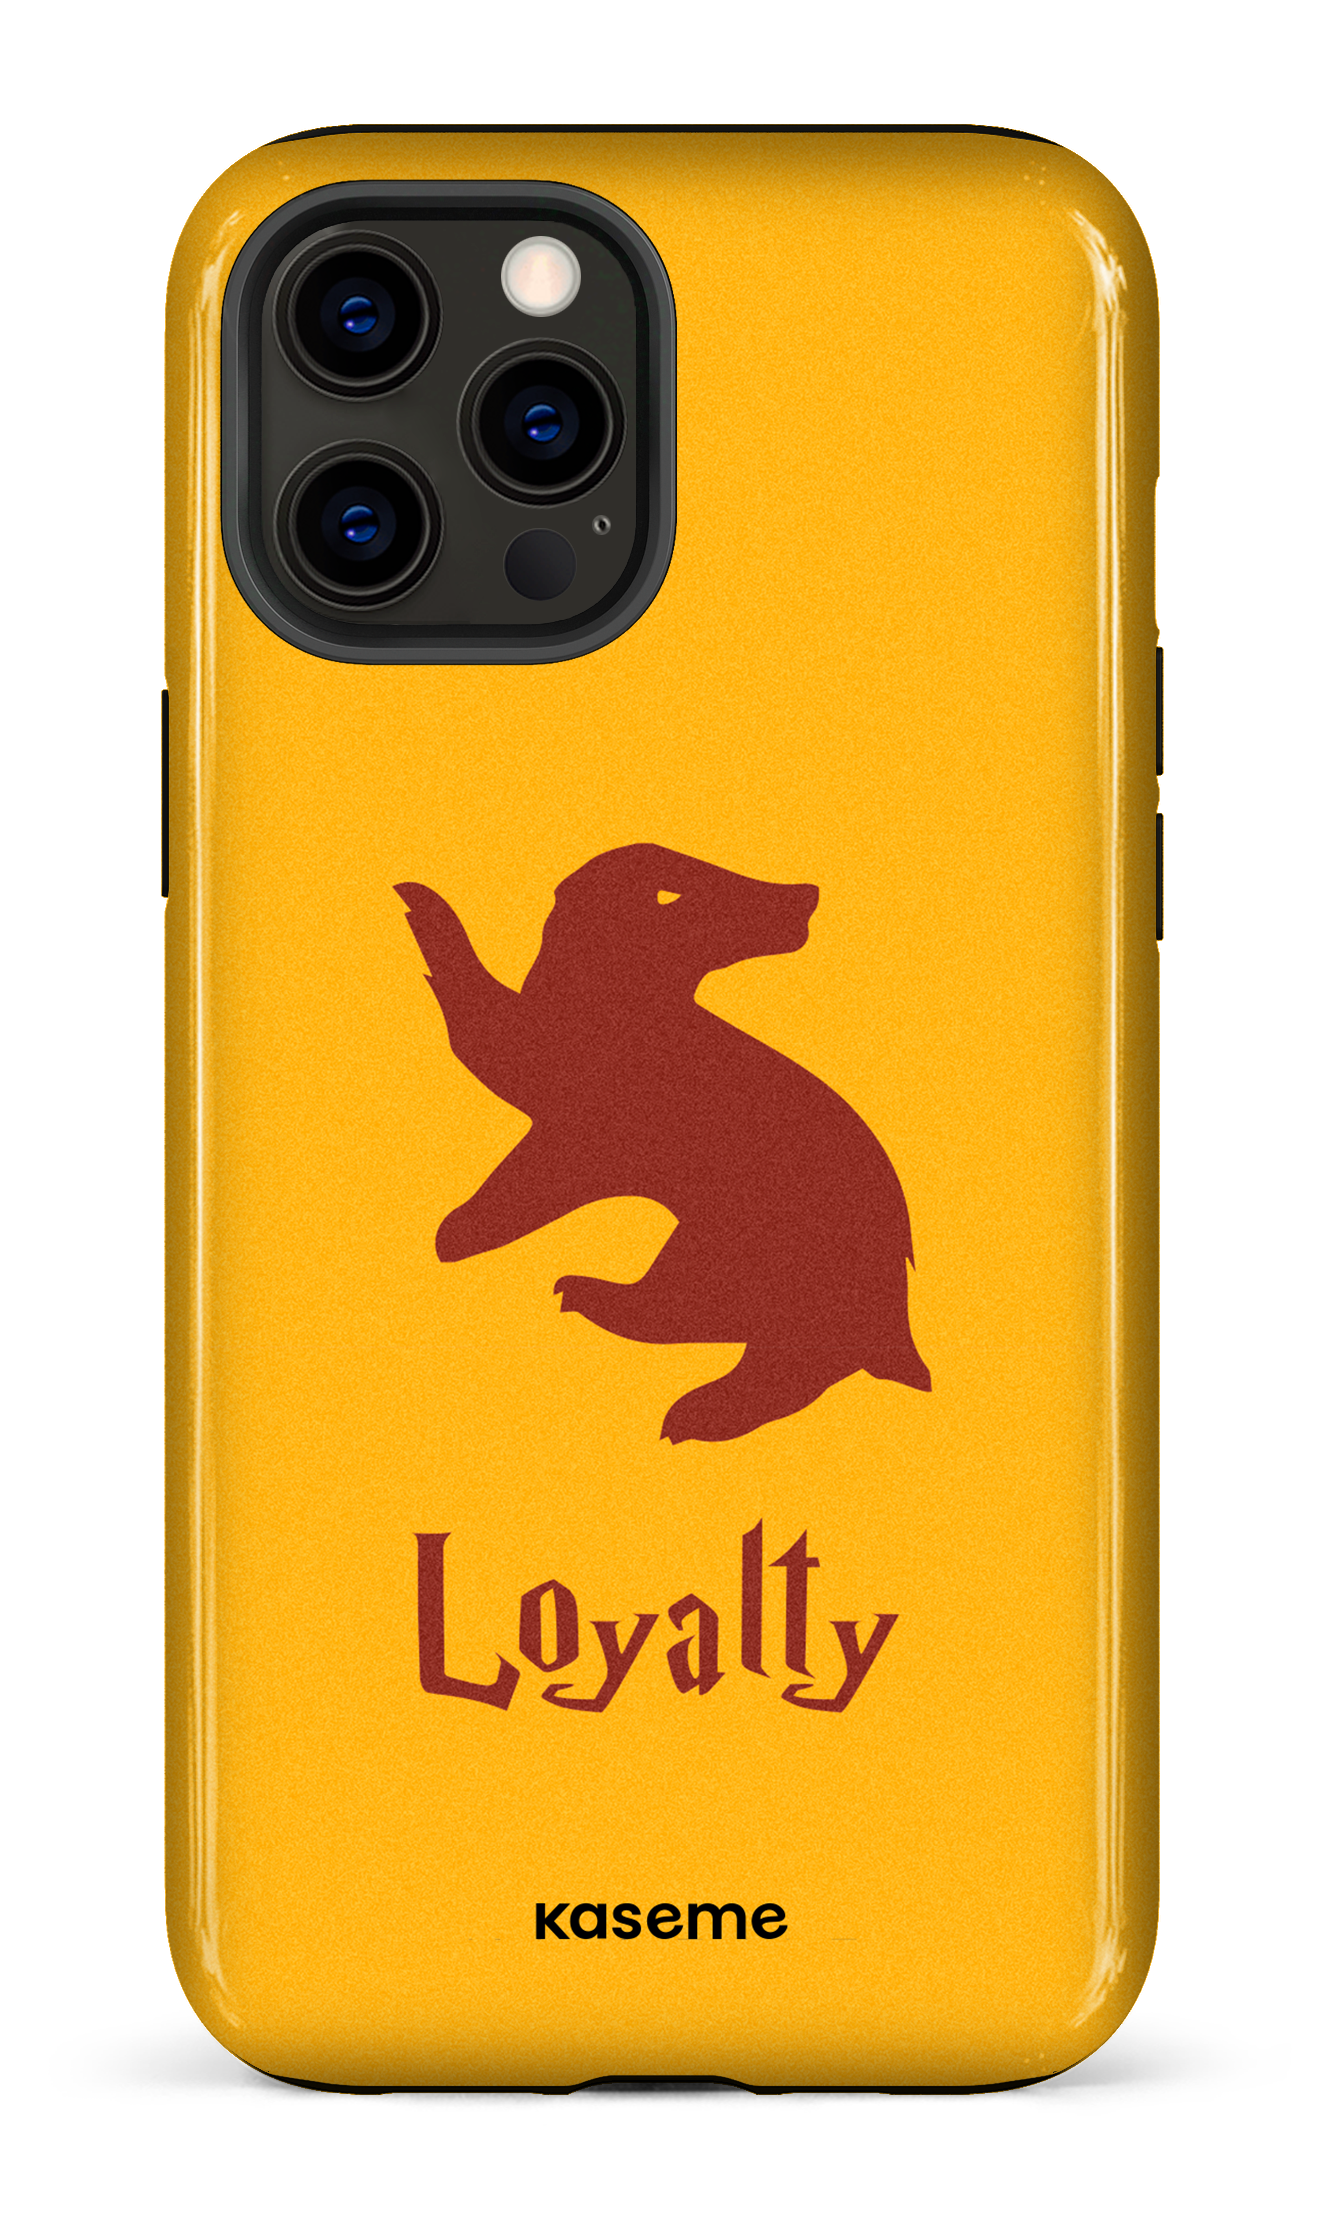 Loyalty - iPhone 12 Pro Max